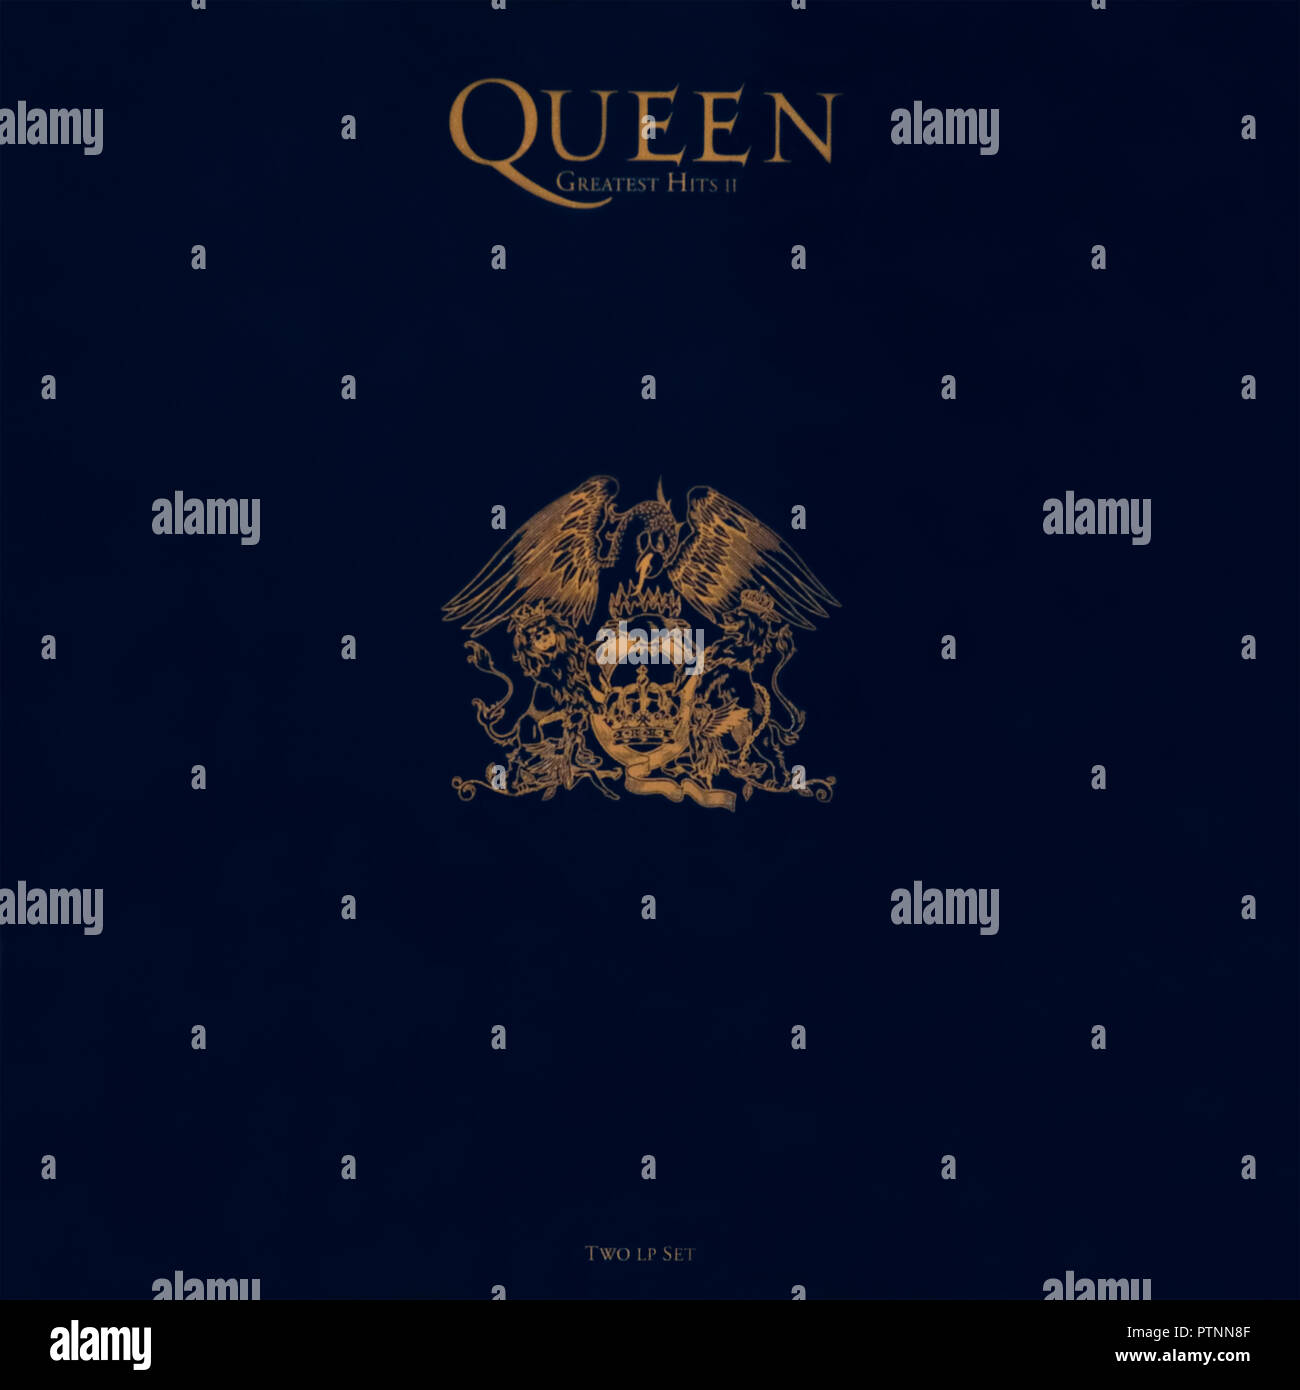 Queen - original Vinyl Album Cover - Greatest Hits II - 1991 Stockfoto